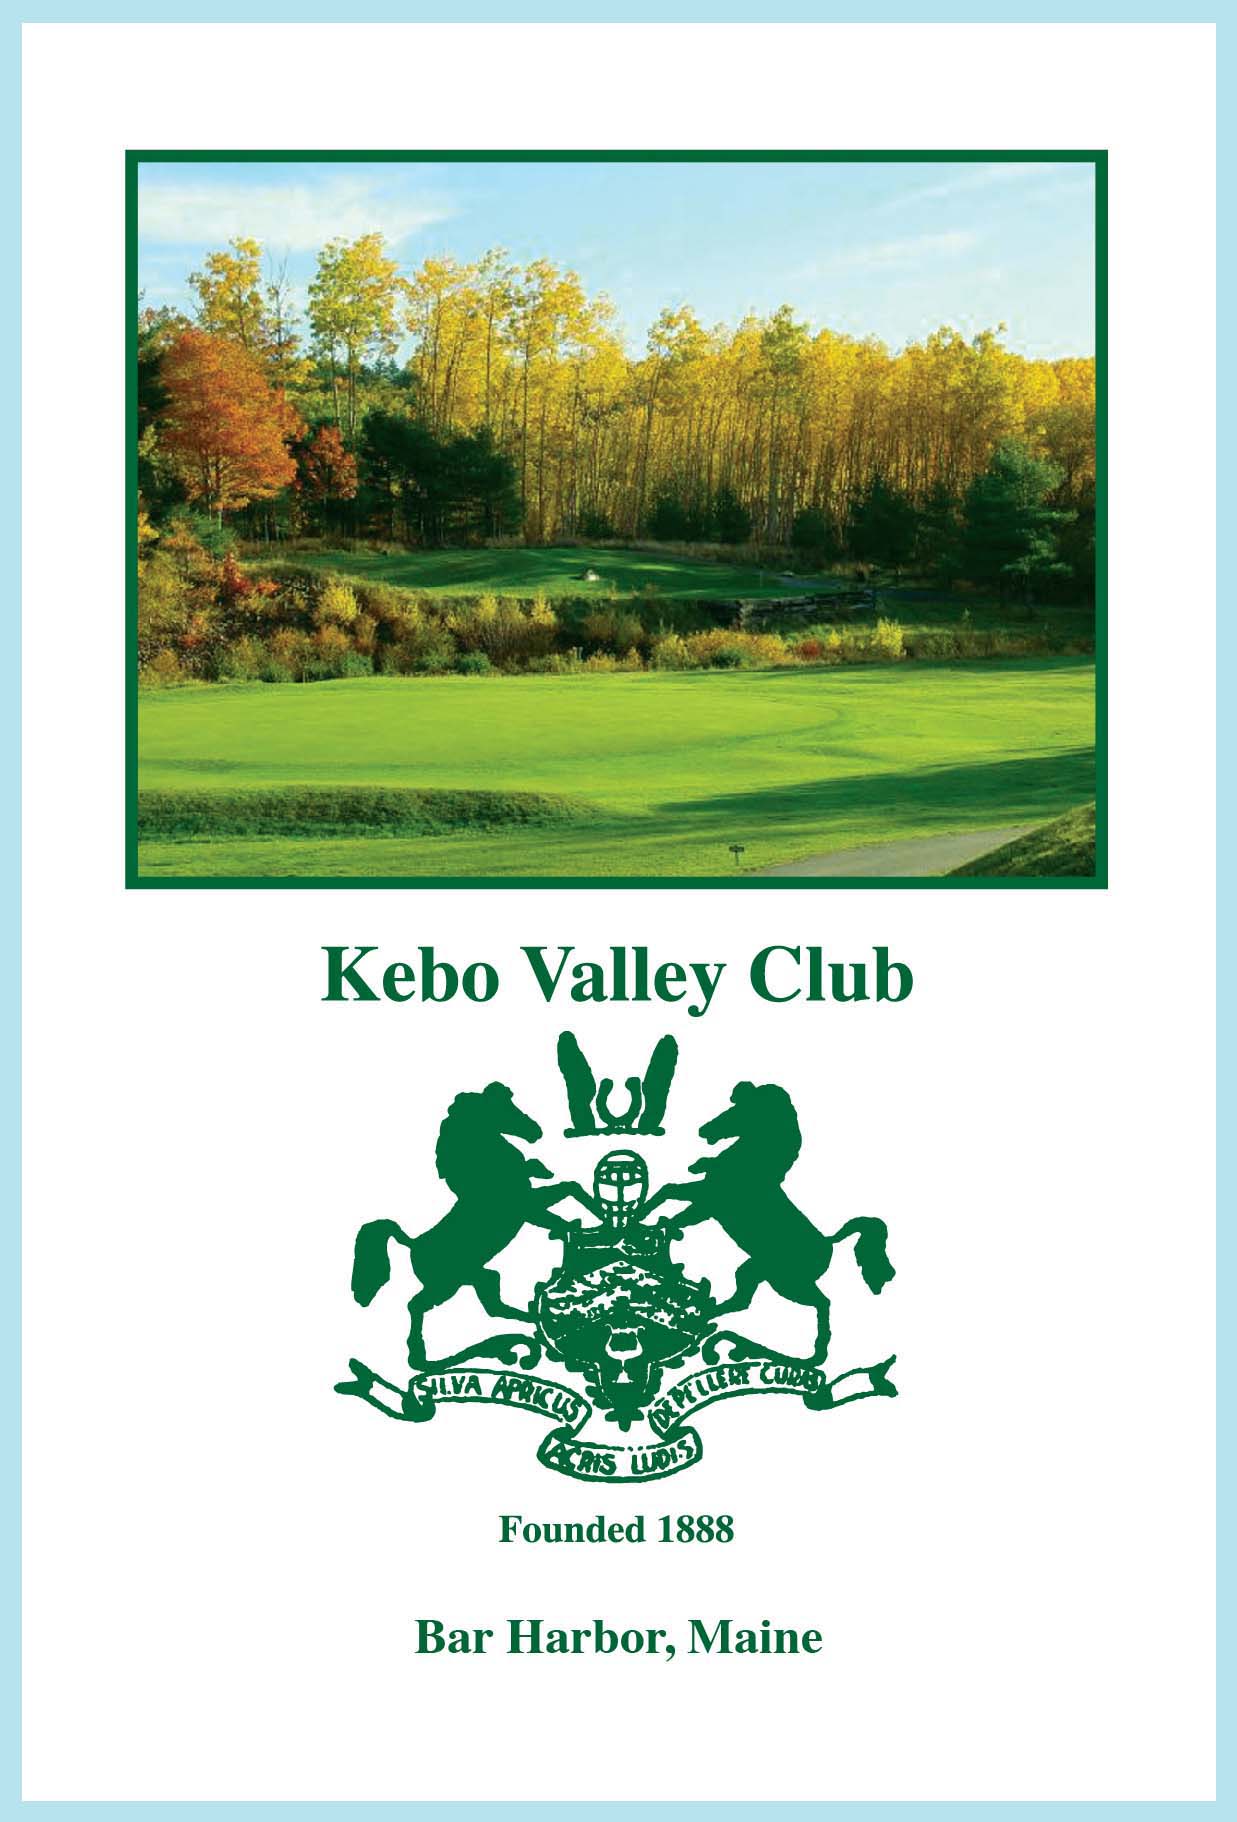 Kebo Valley Club